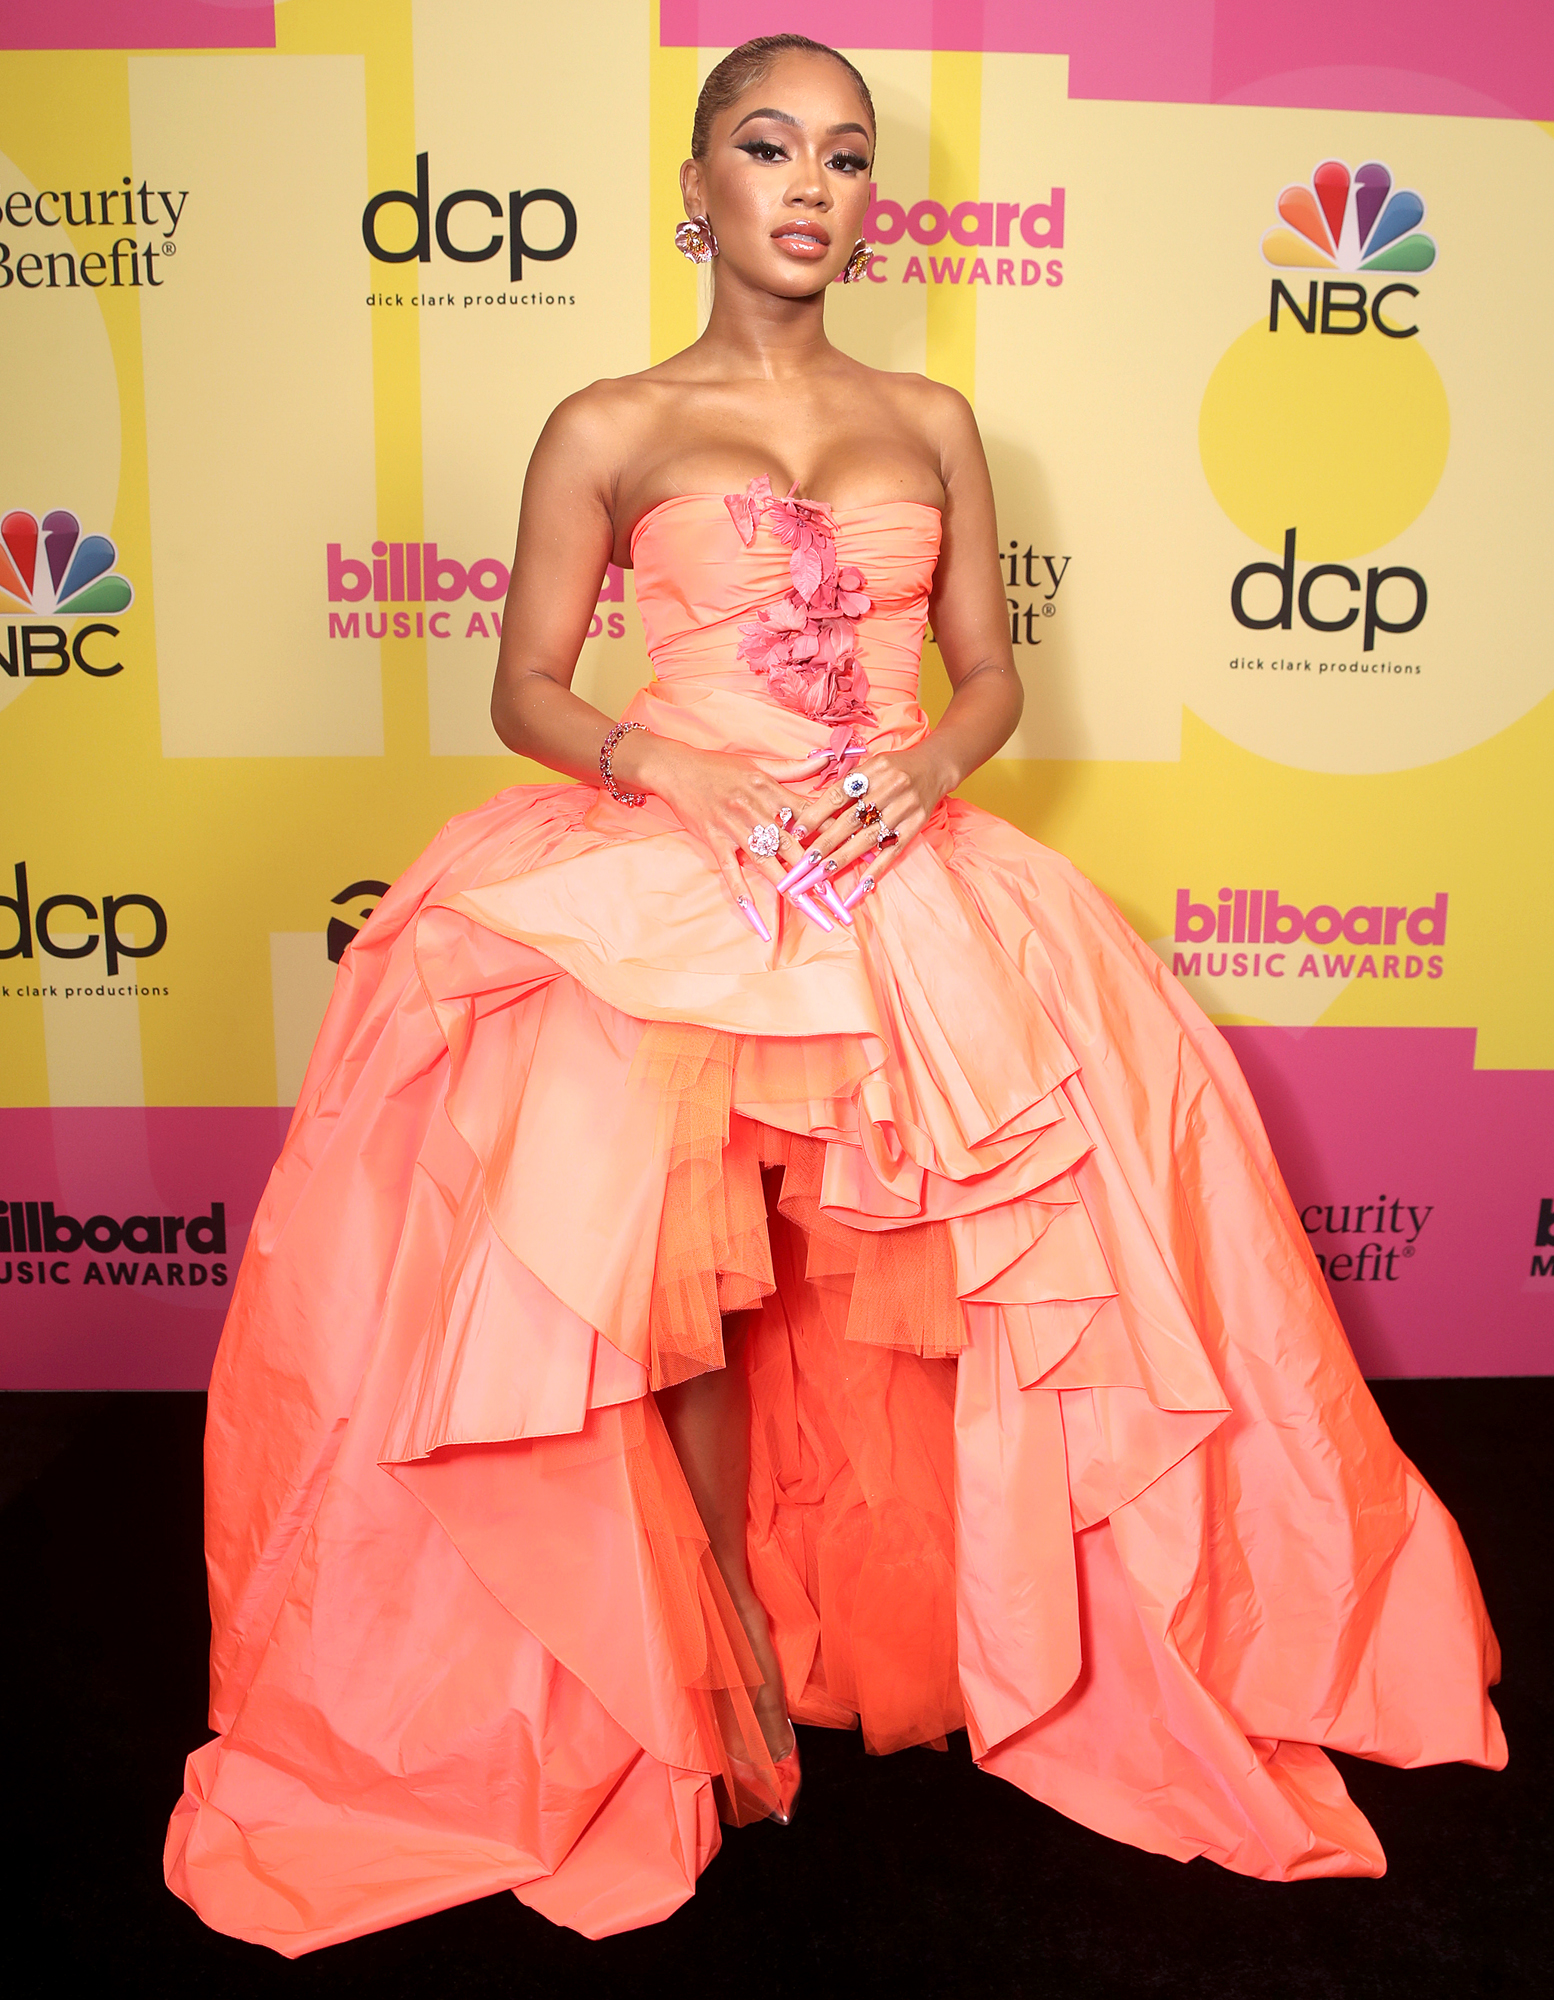 Billboard Music Awards 2021: Red Carpet Dresses, Looks